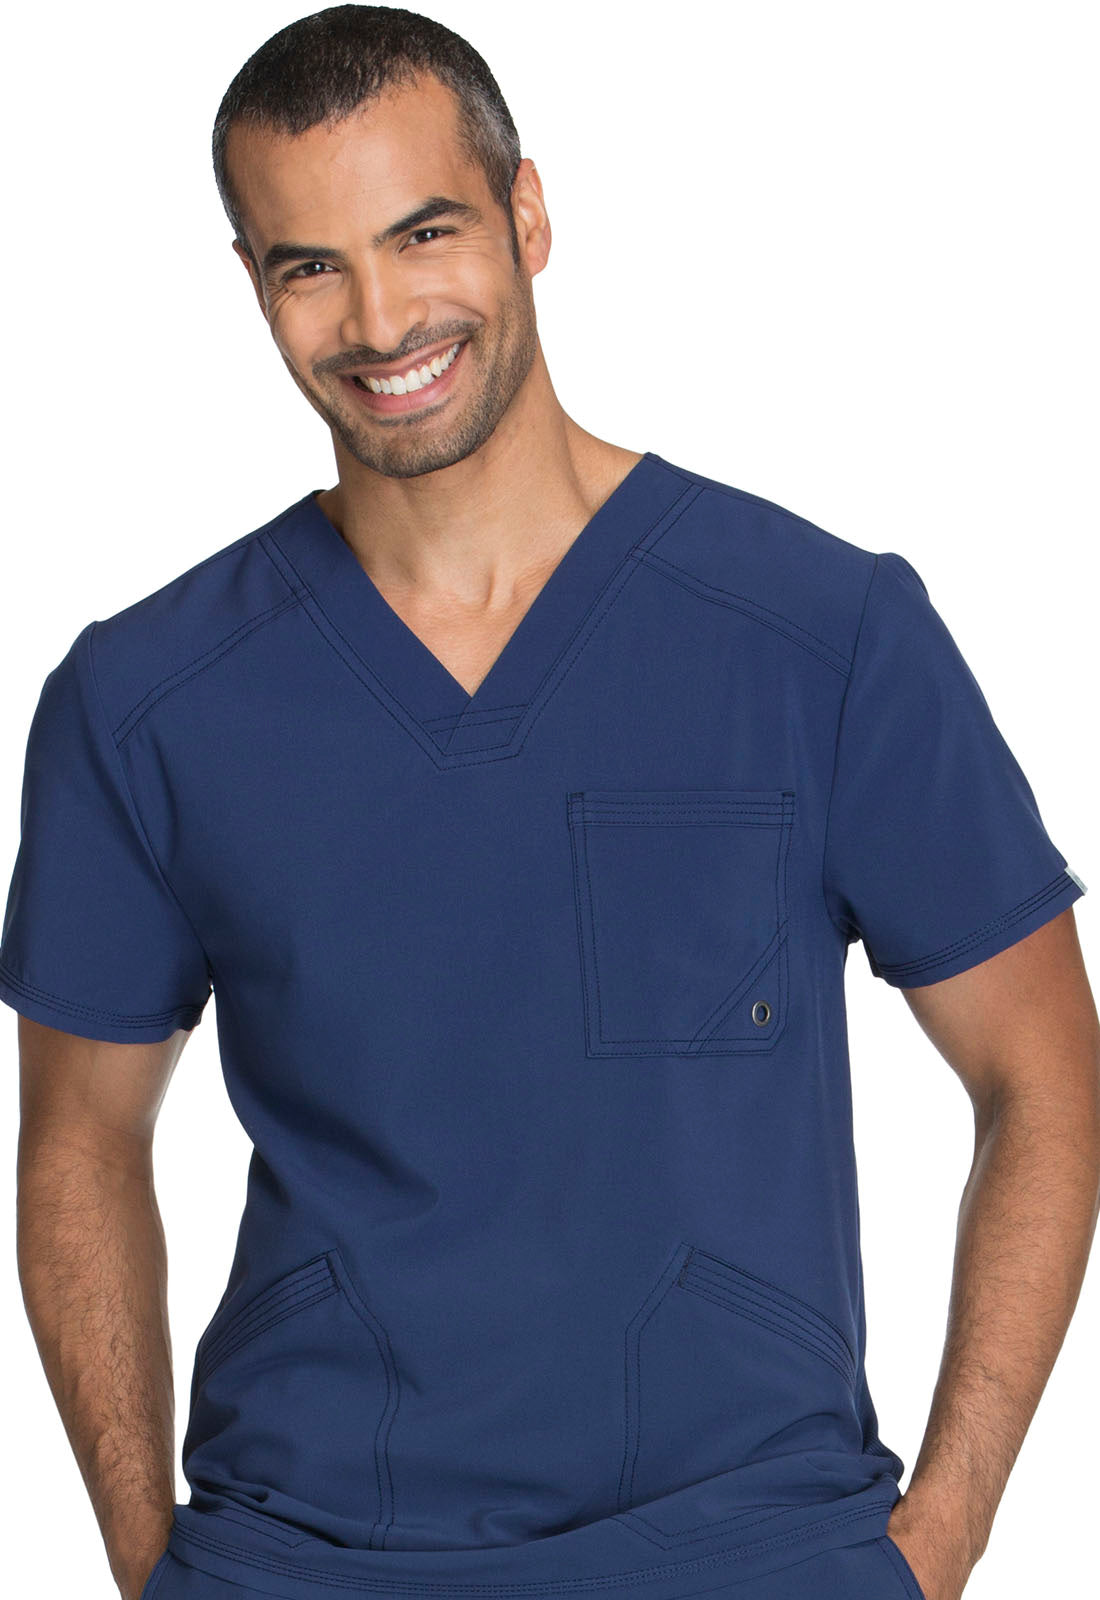 medical scrubs Canada, quality medical uniforms Canada